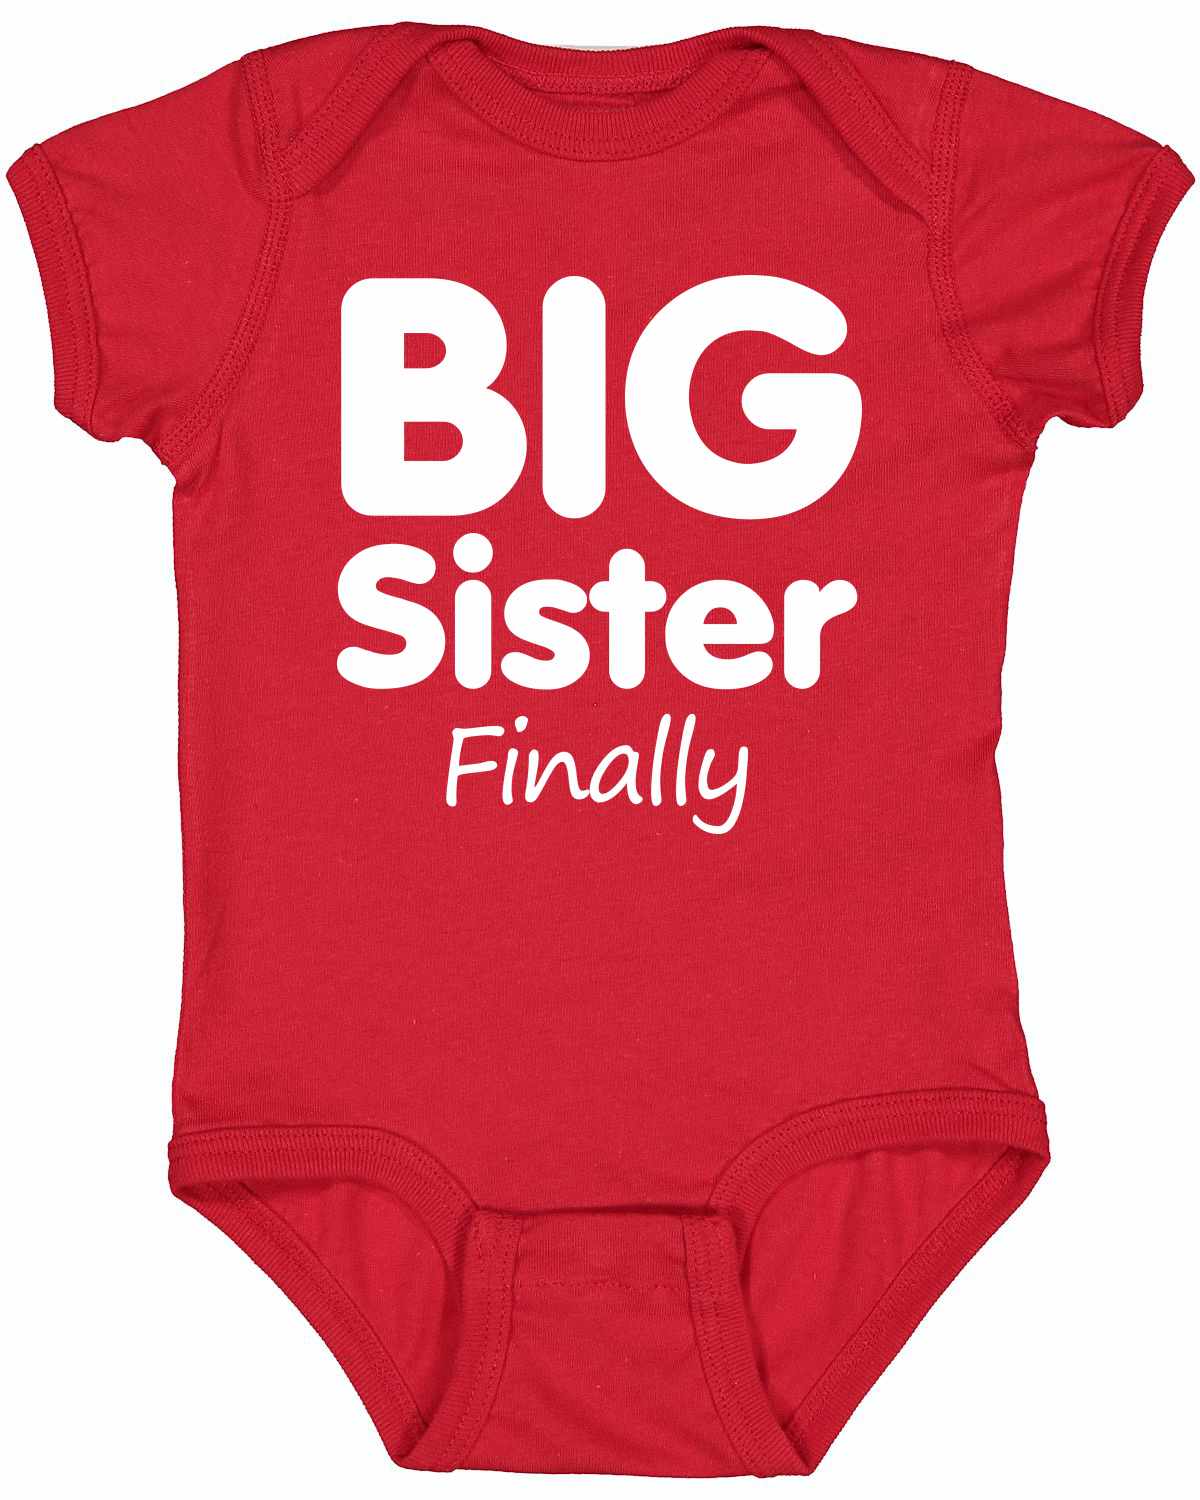 Big Sister Finally on Infant BodySuit (#1376-10)